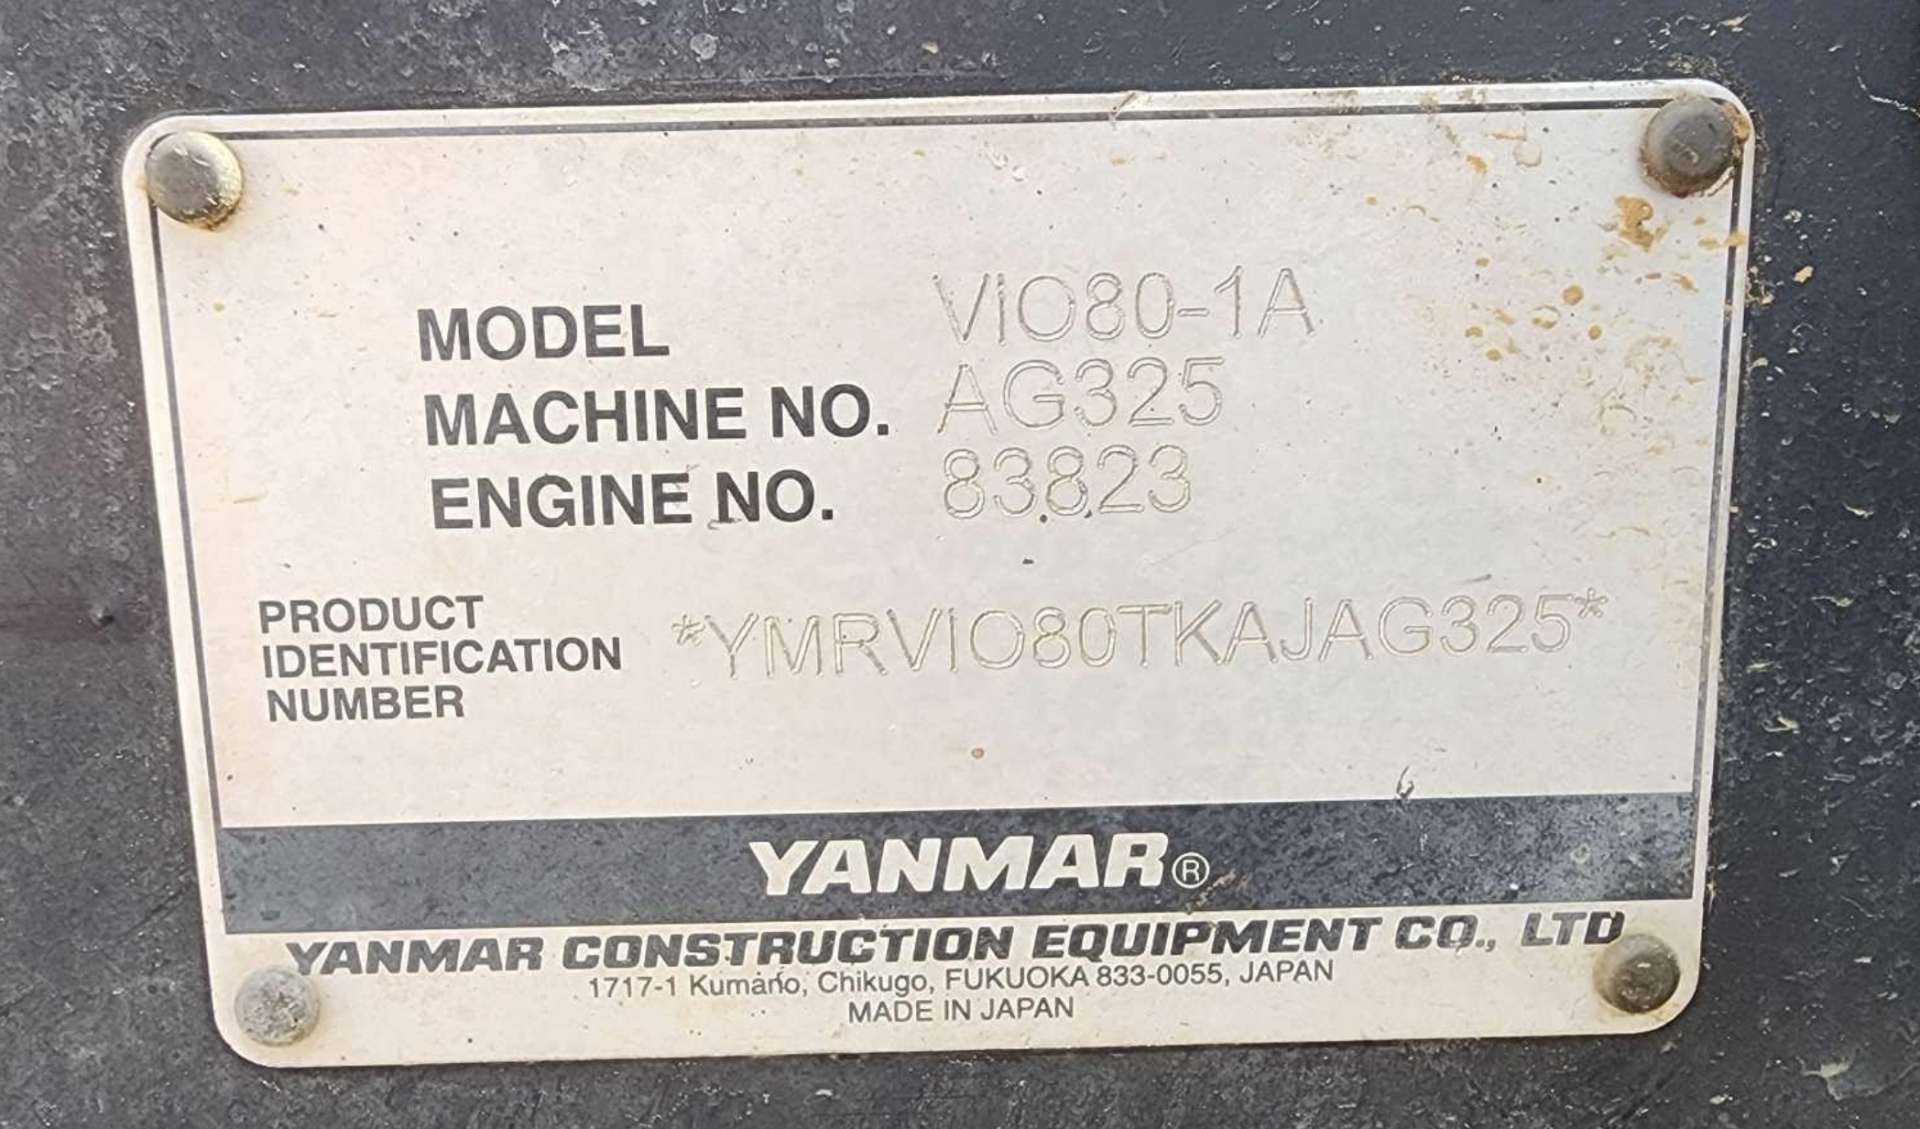 2019 Yanmar VIO80-1A Excavator - Image 6 of 6